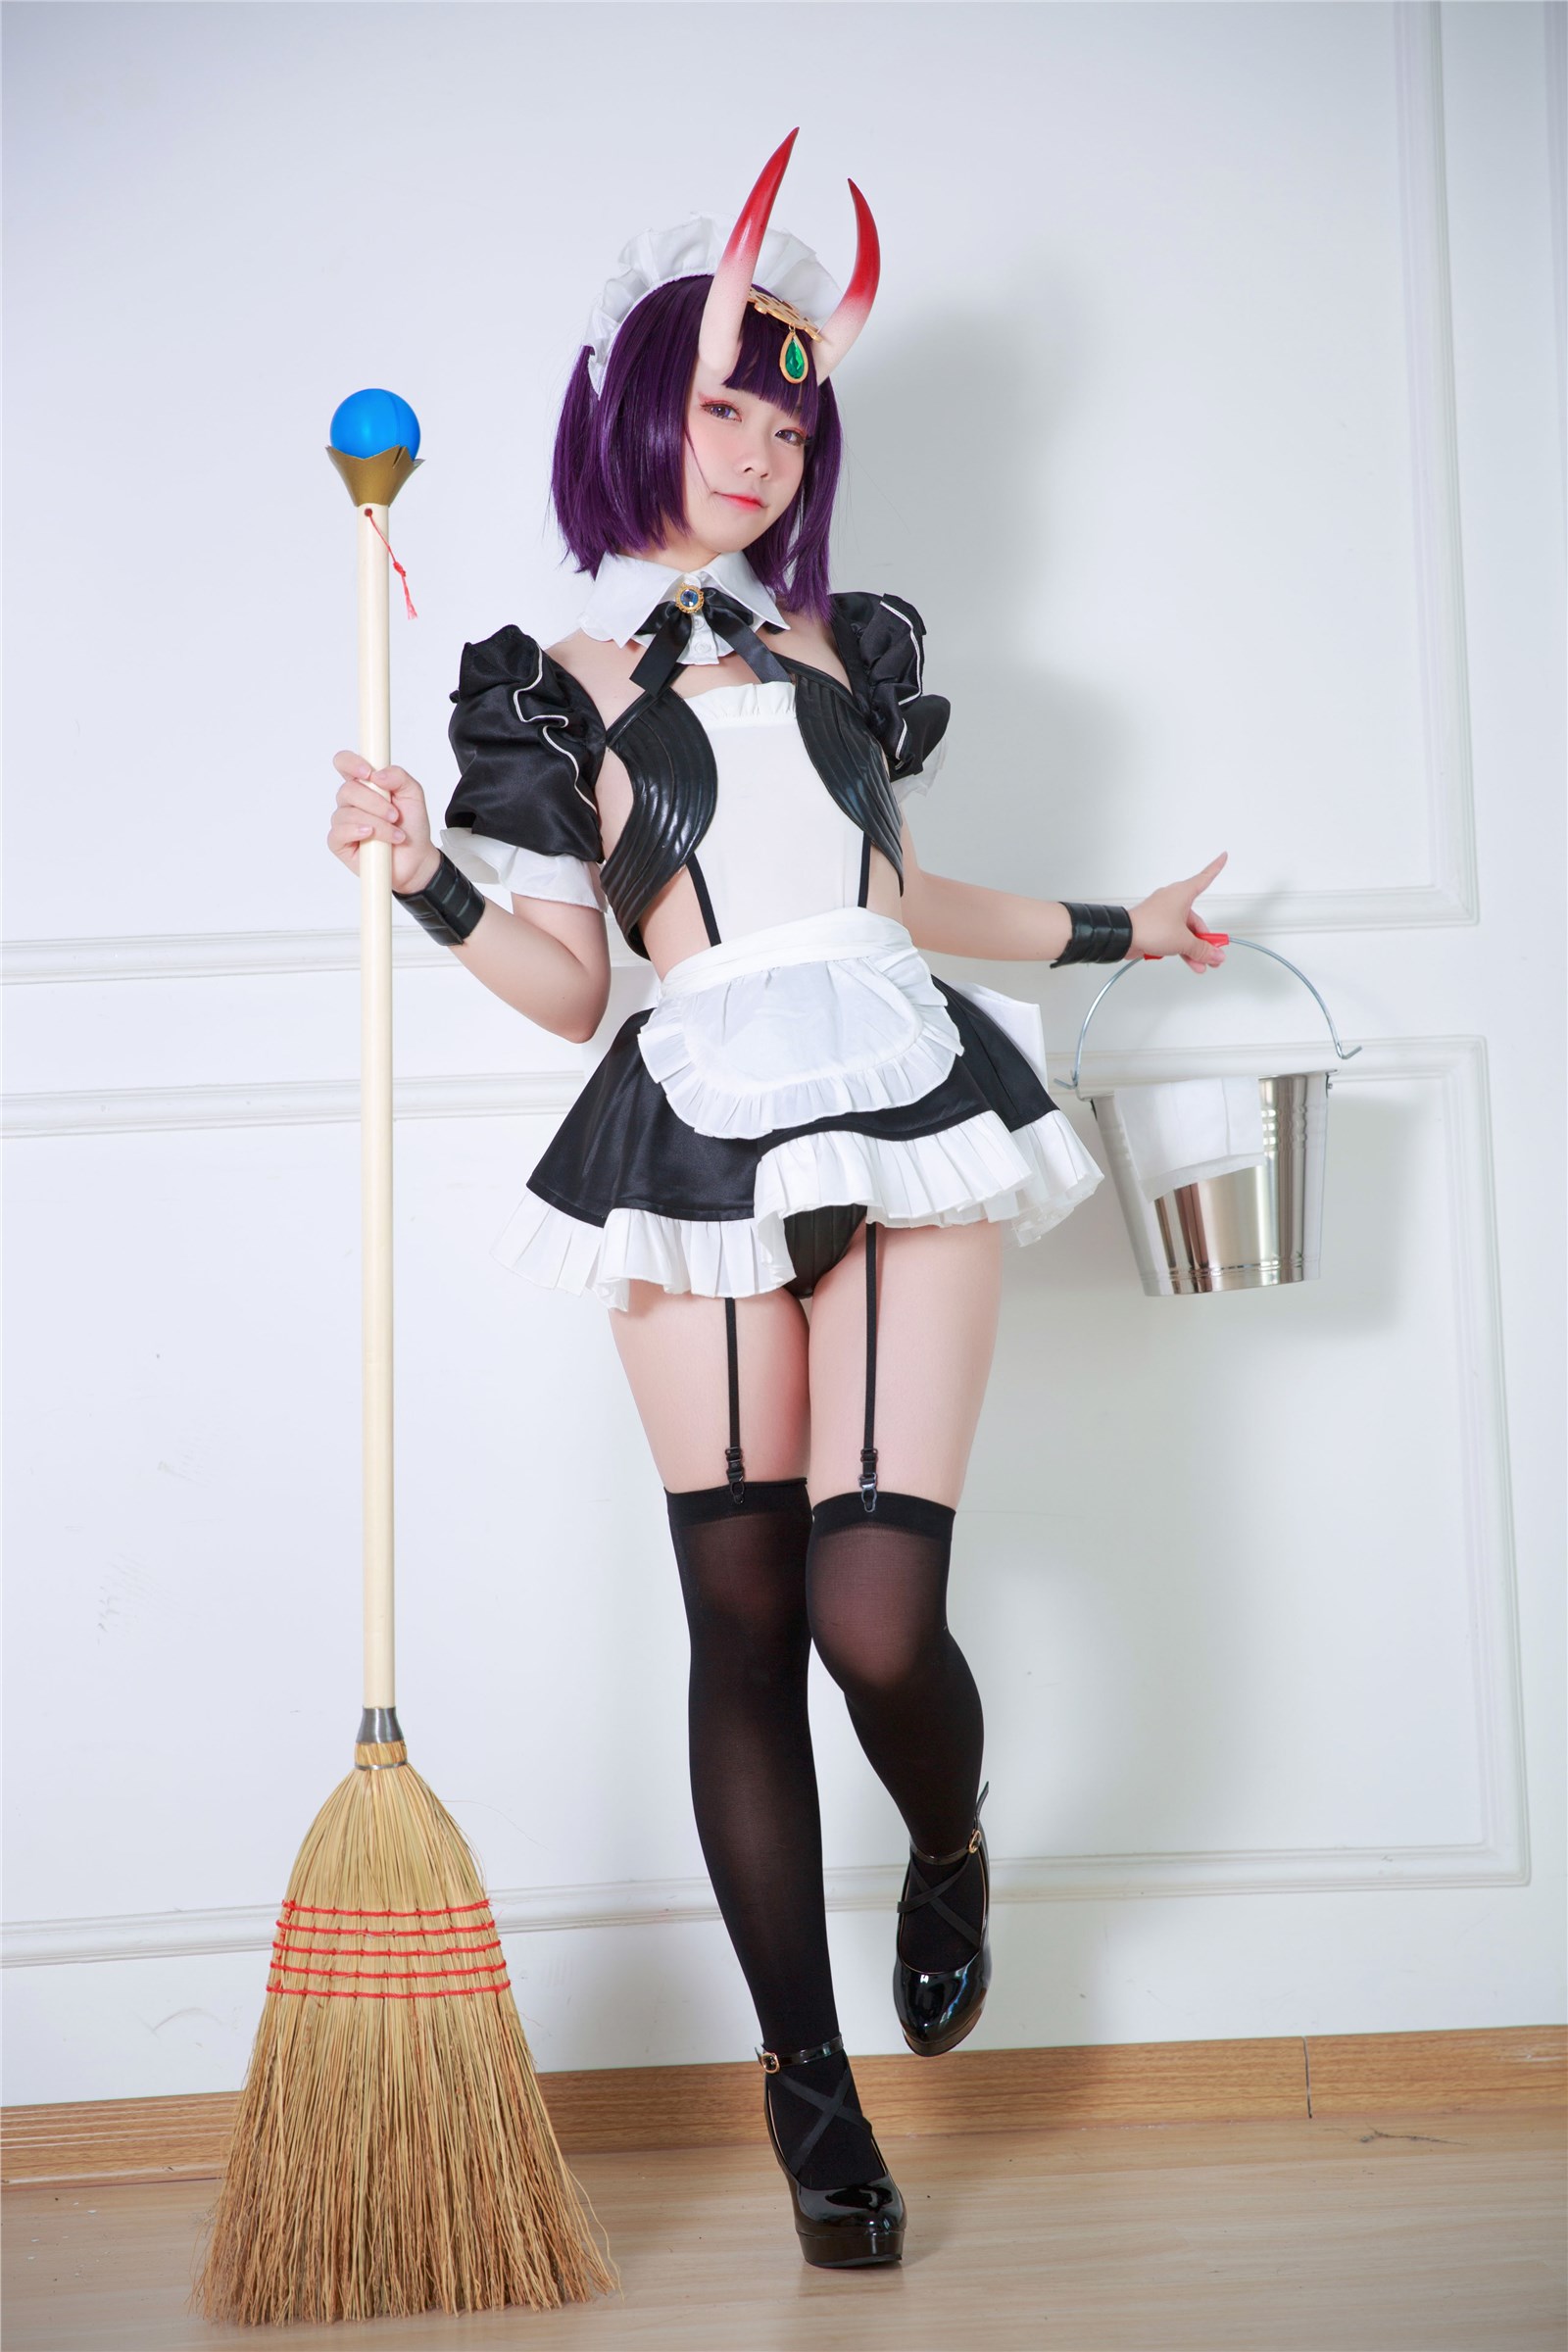 Anime blogger G44 won't get hurt. - Wine eats maid(1)